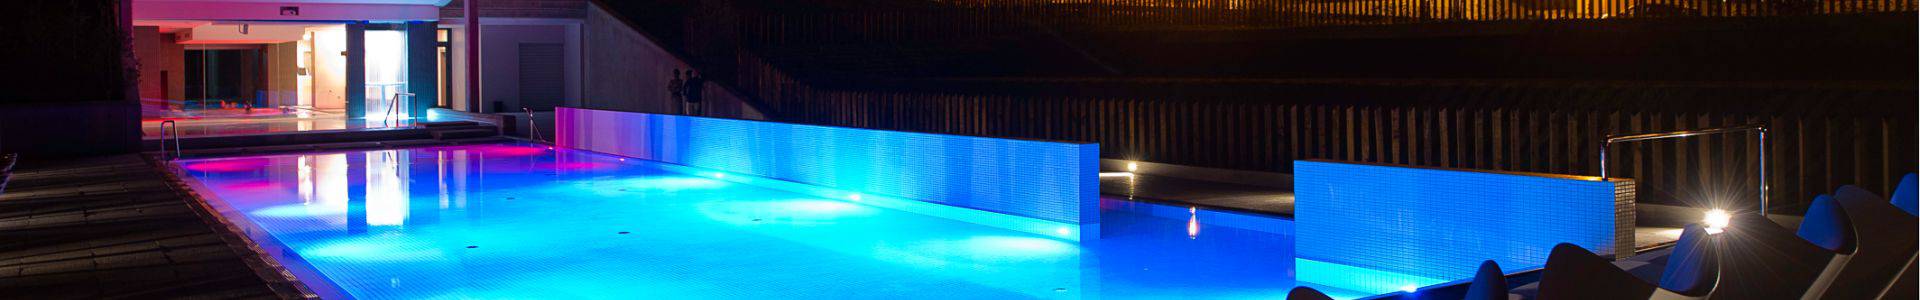 Gran Hotel Las Caldas by blau hotels - Asturien - 